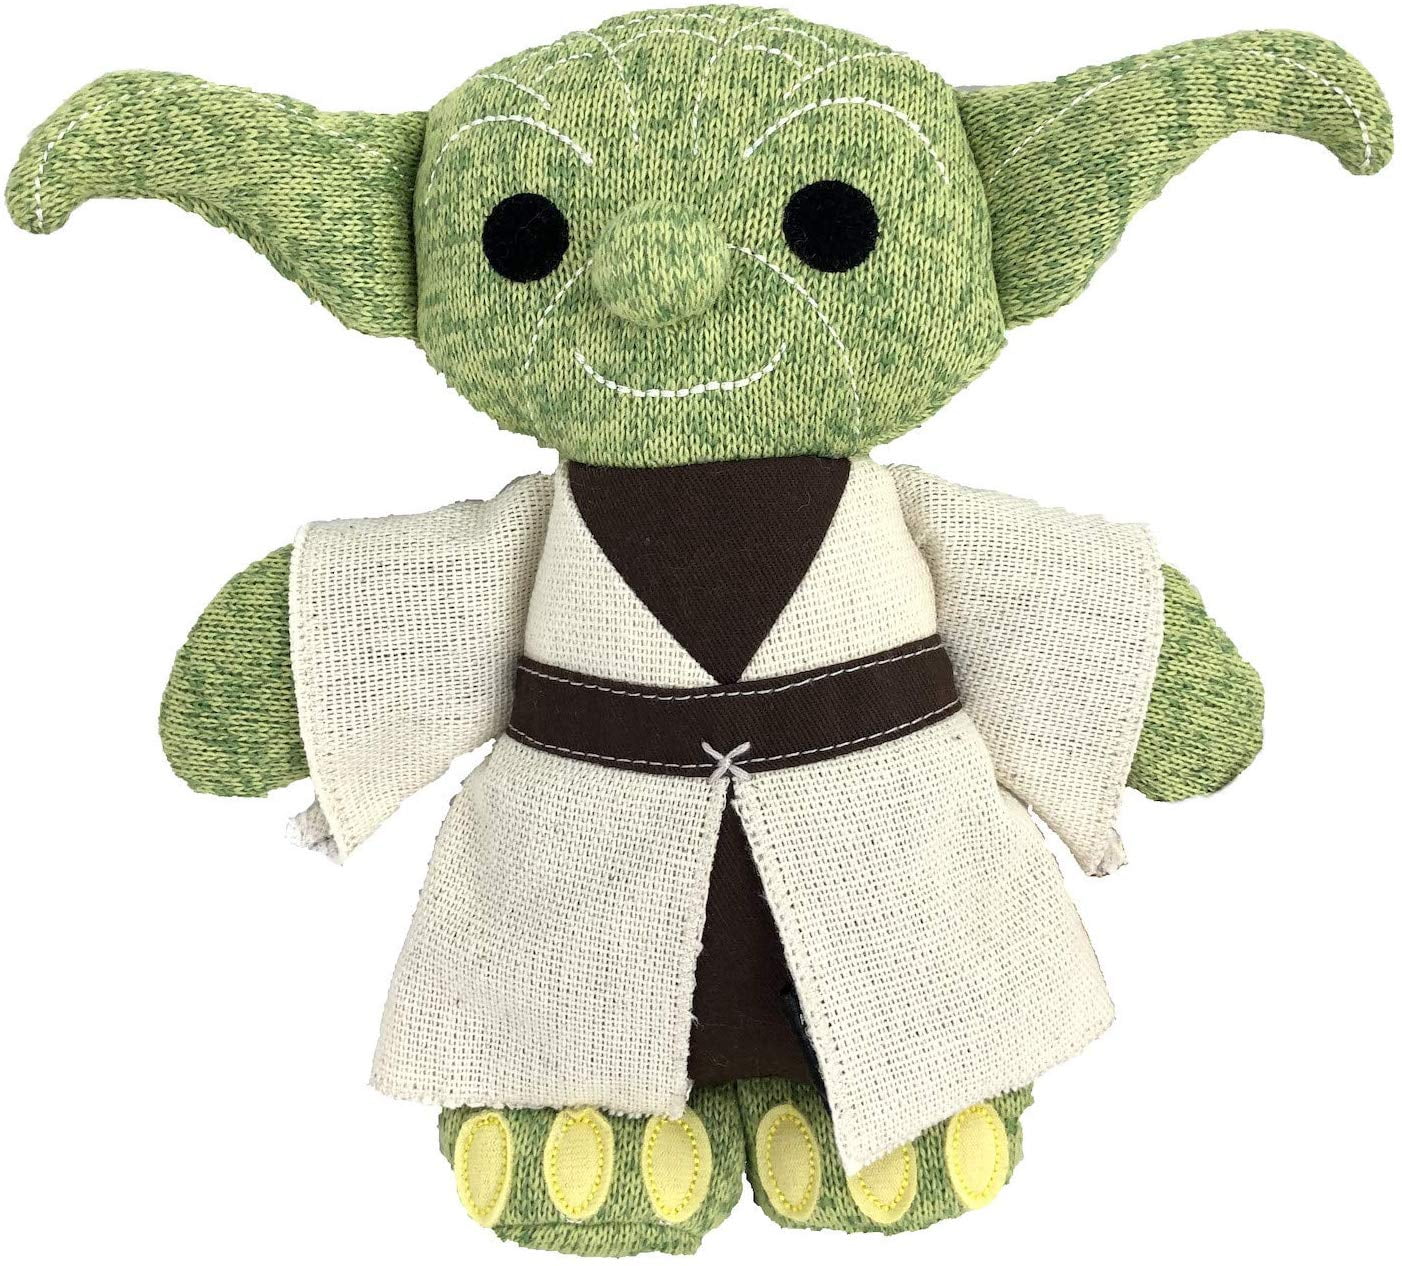 Disney Star Wars Large 16" Plush Soft Toys Yoda R2D2 Darth Vader 